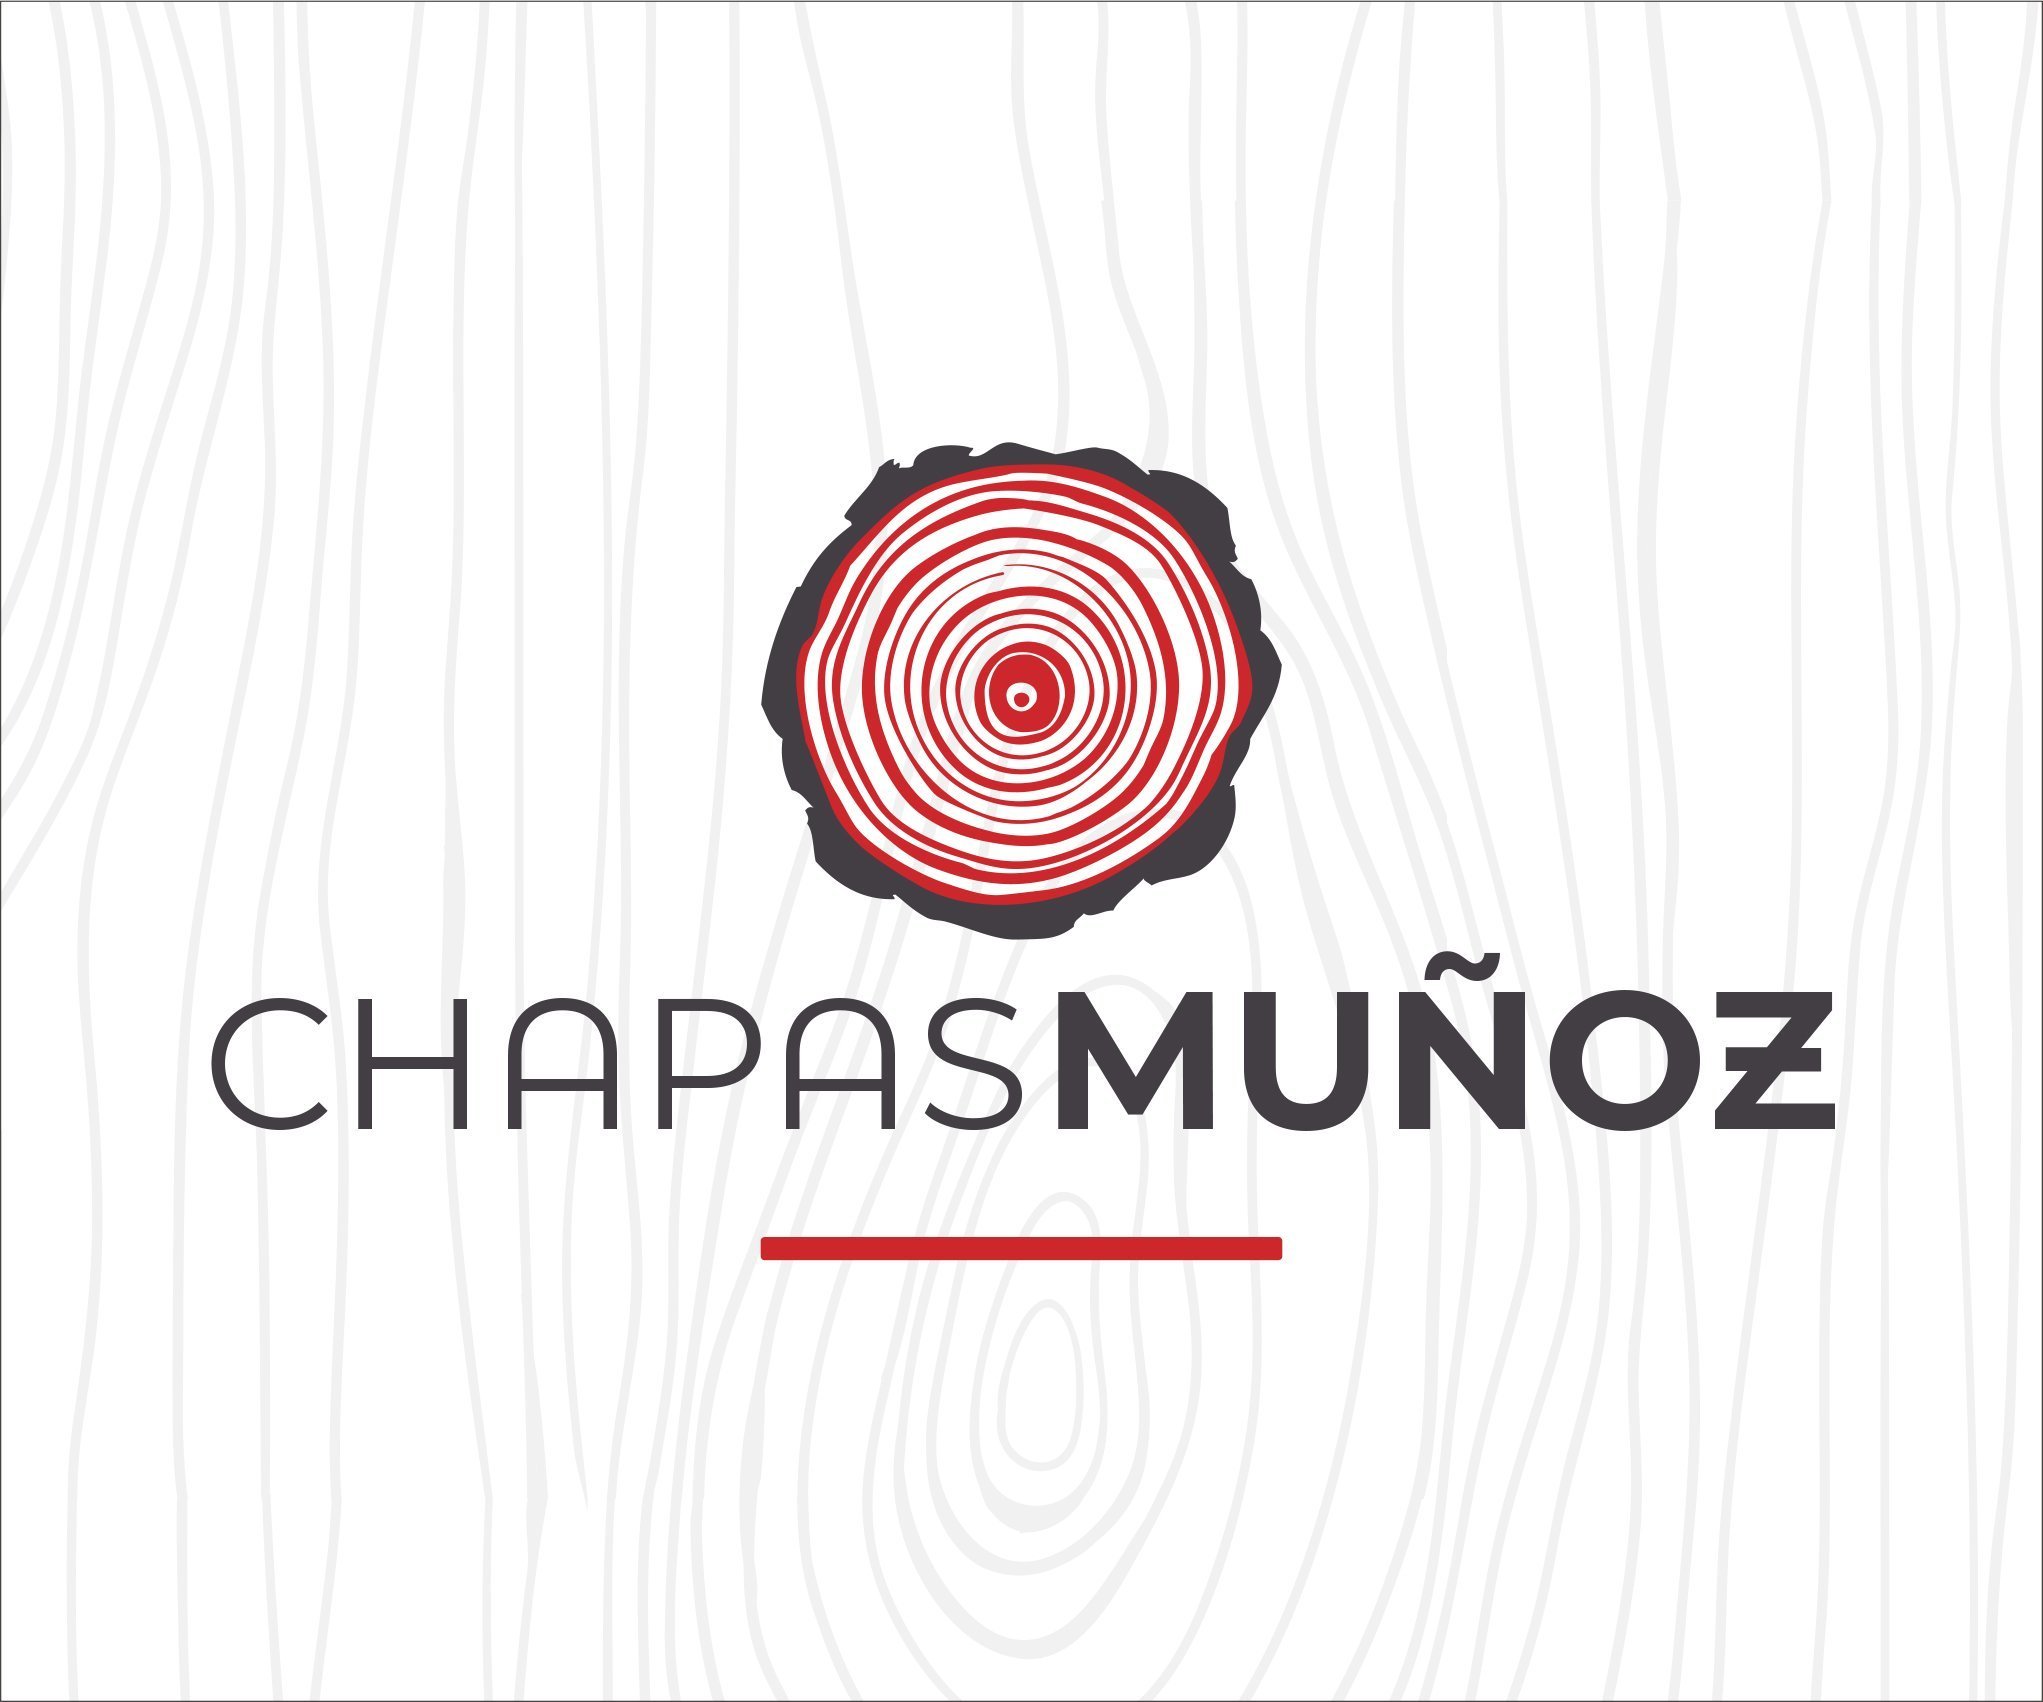 CHAPAS MUNOZ logo Imag Impressions